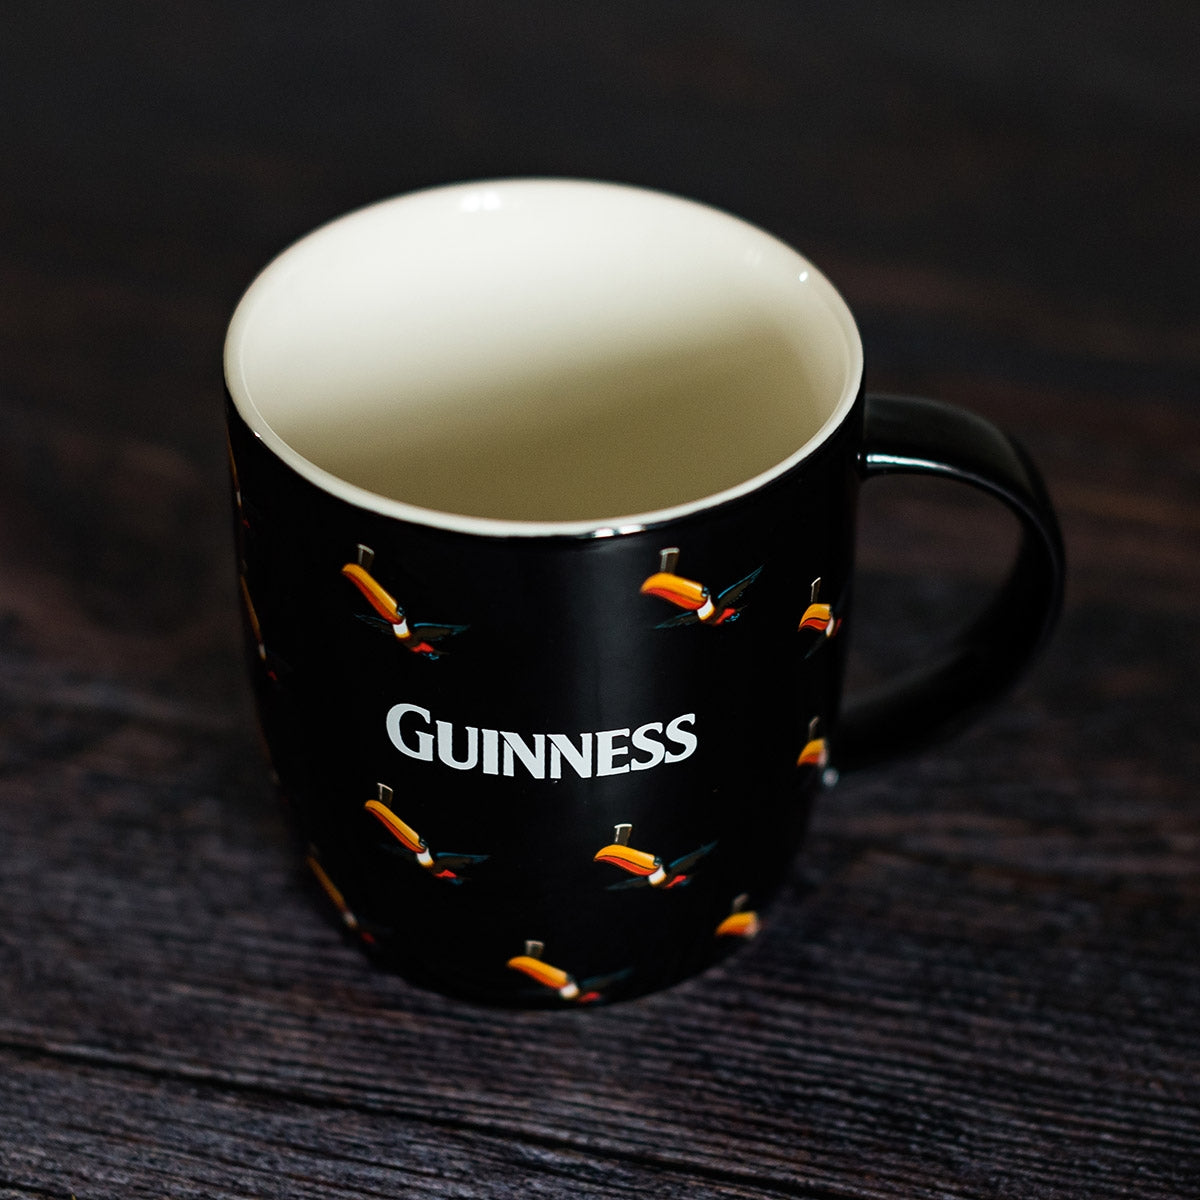 Guinness Black Mug with Multiple Flying Toucans by Guinness.